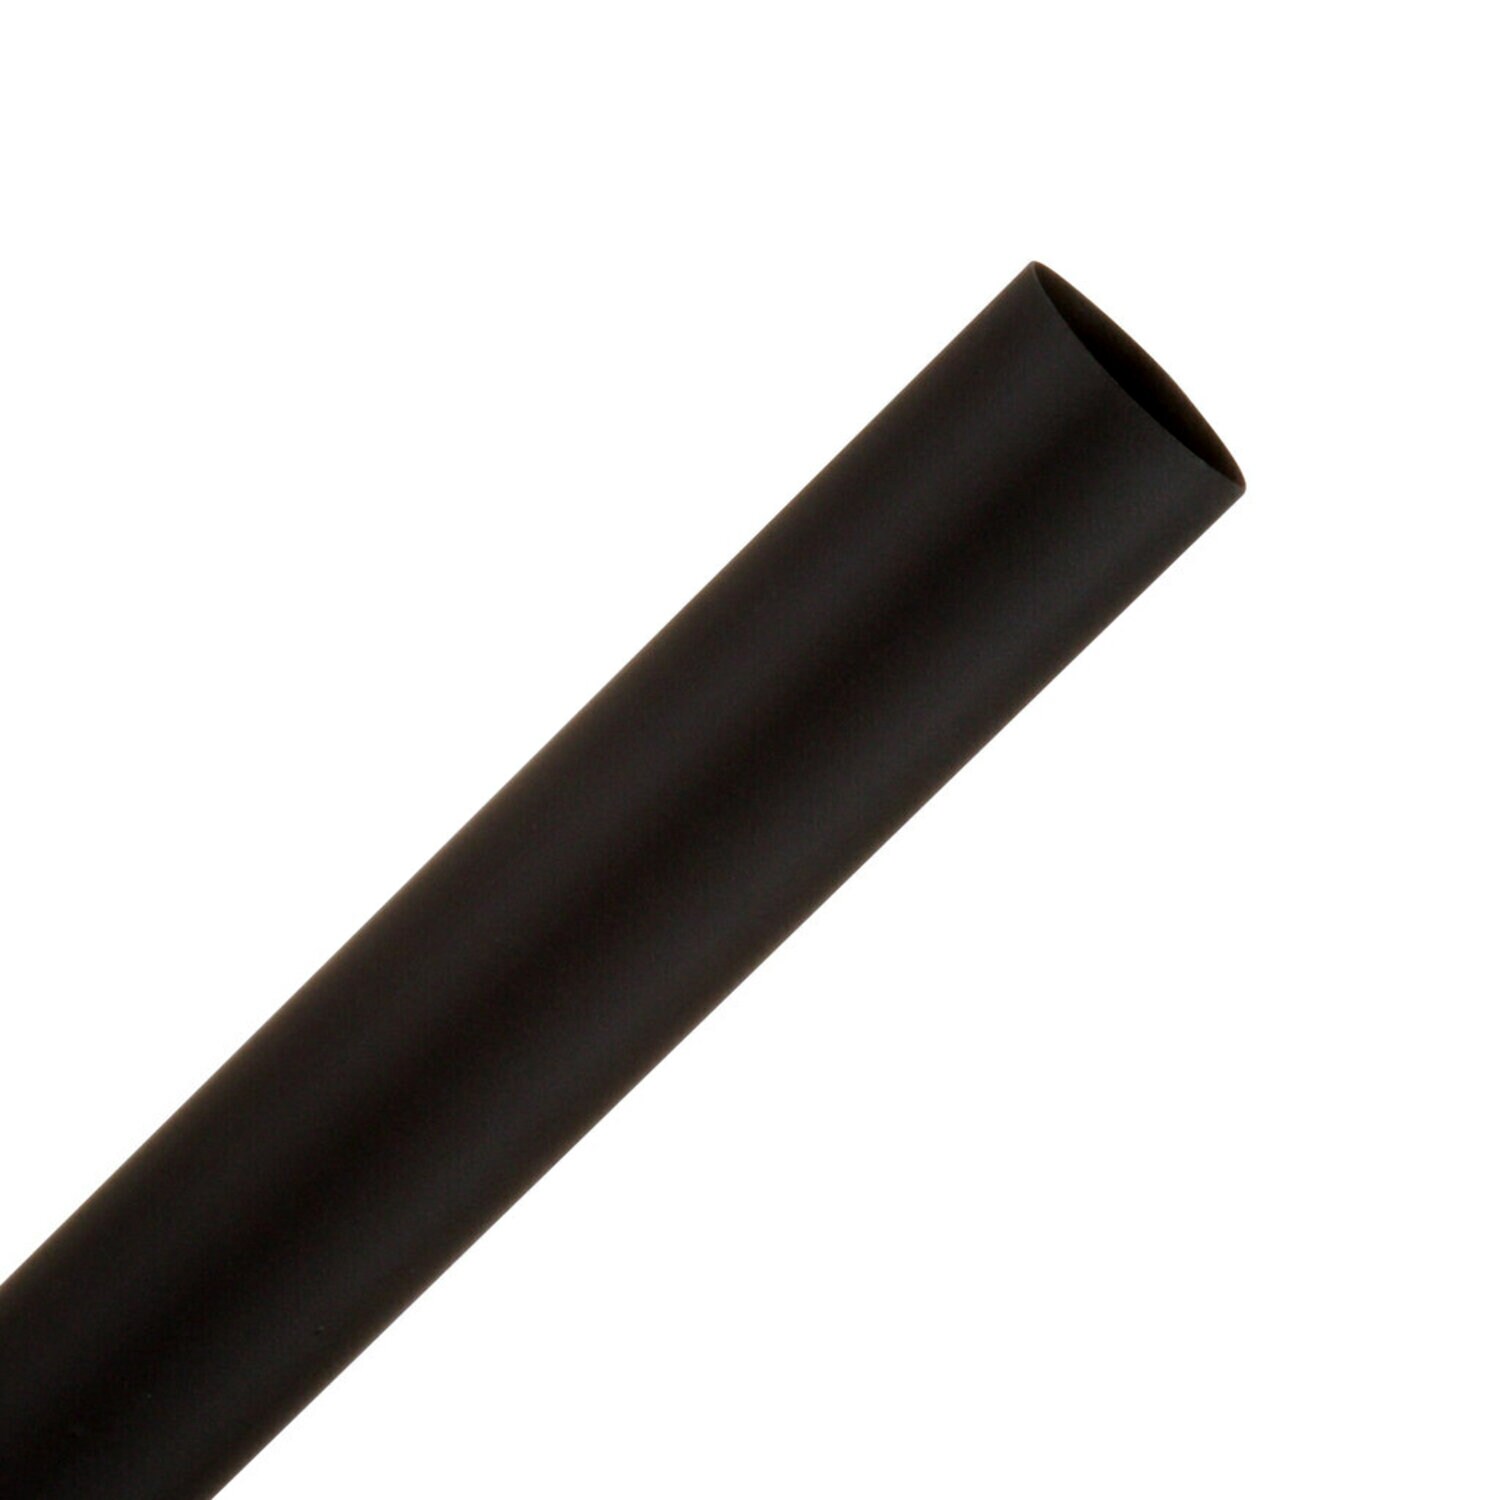 7100024898 - 3M Heat Shrink Thin-Wall Tubing FP-301-1/2-Black-200', 200 ft Length
per spool, 3 spools/case